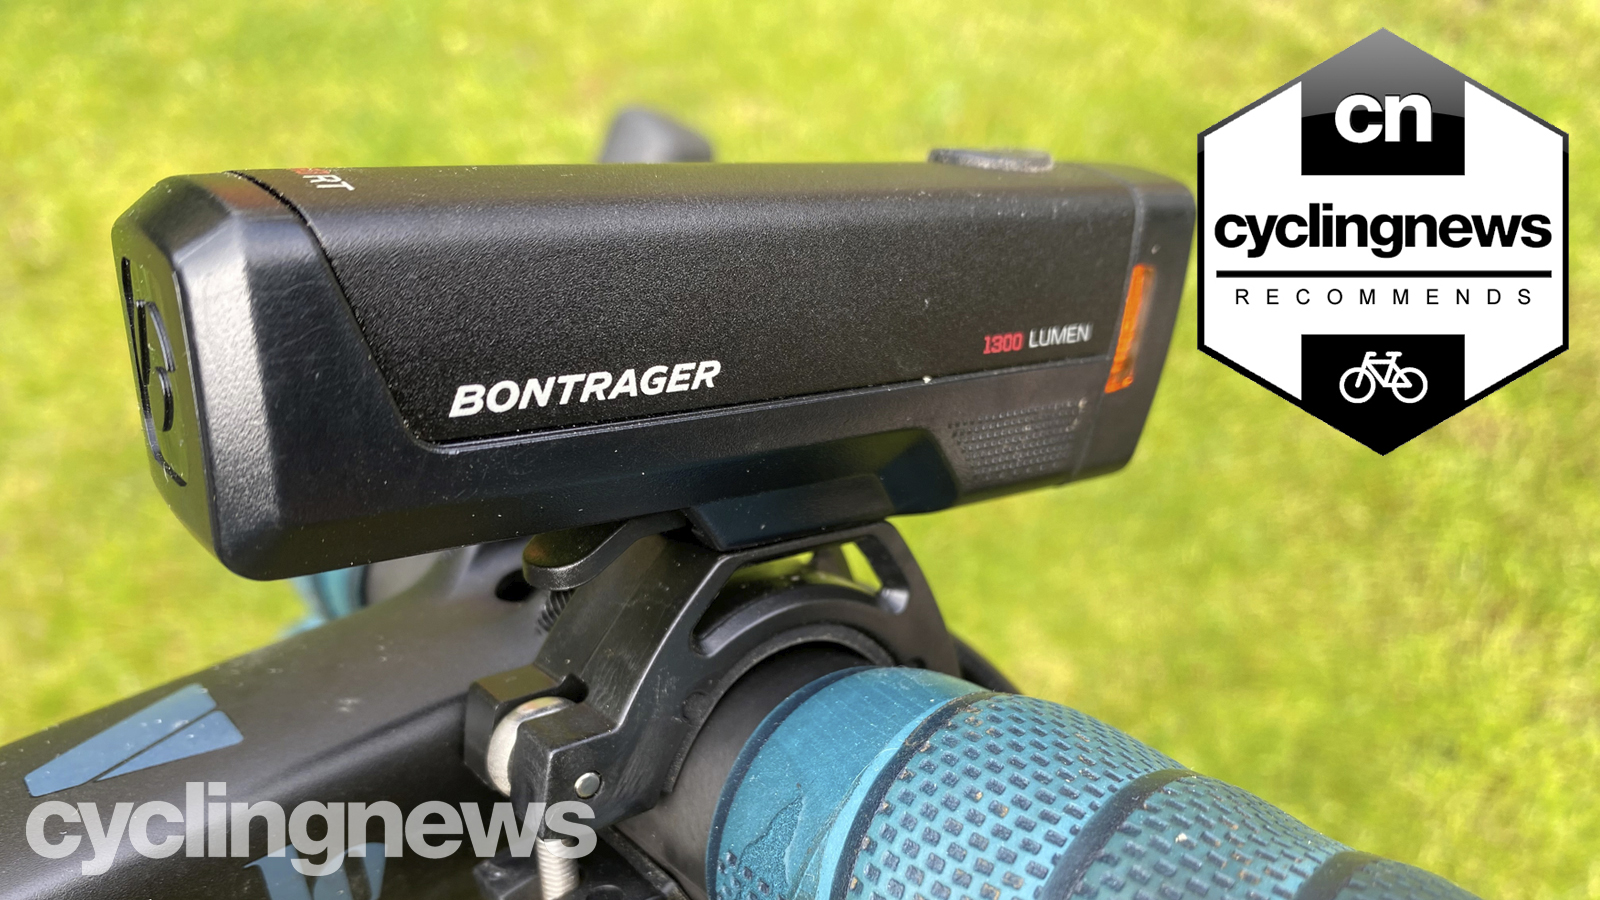 ouder Uitsteken maximaliseren Bontrager Ion Pro RT 1300 light review | Cyclingnews